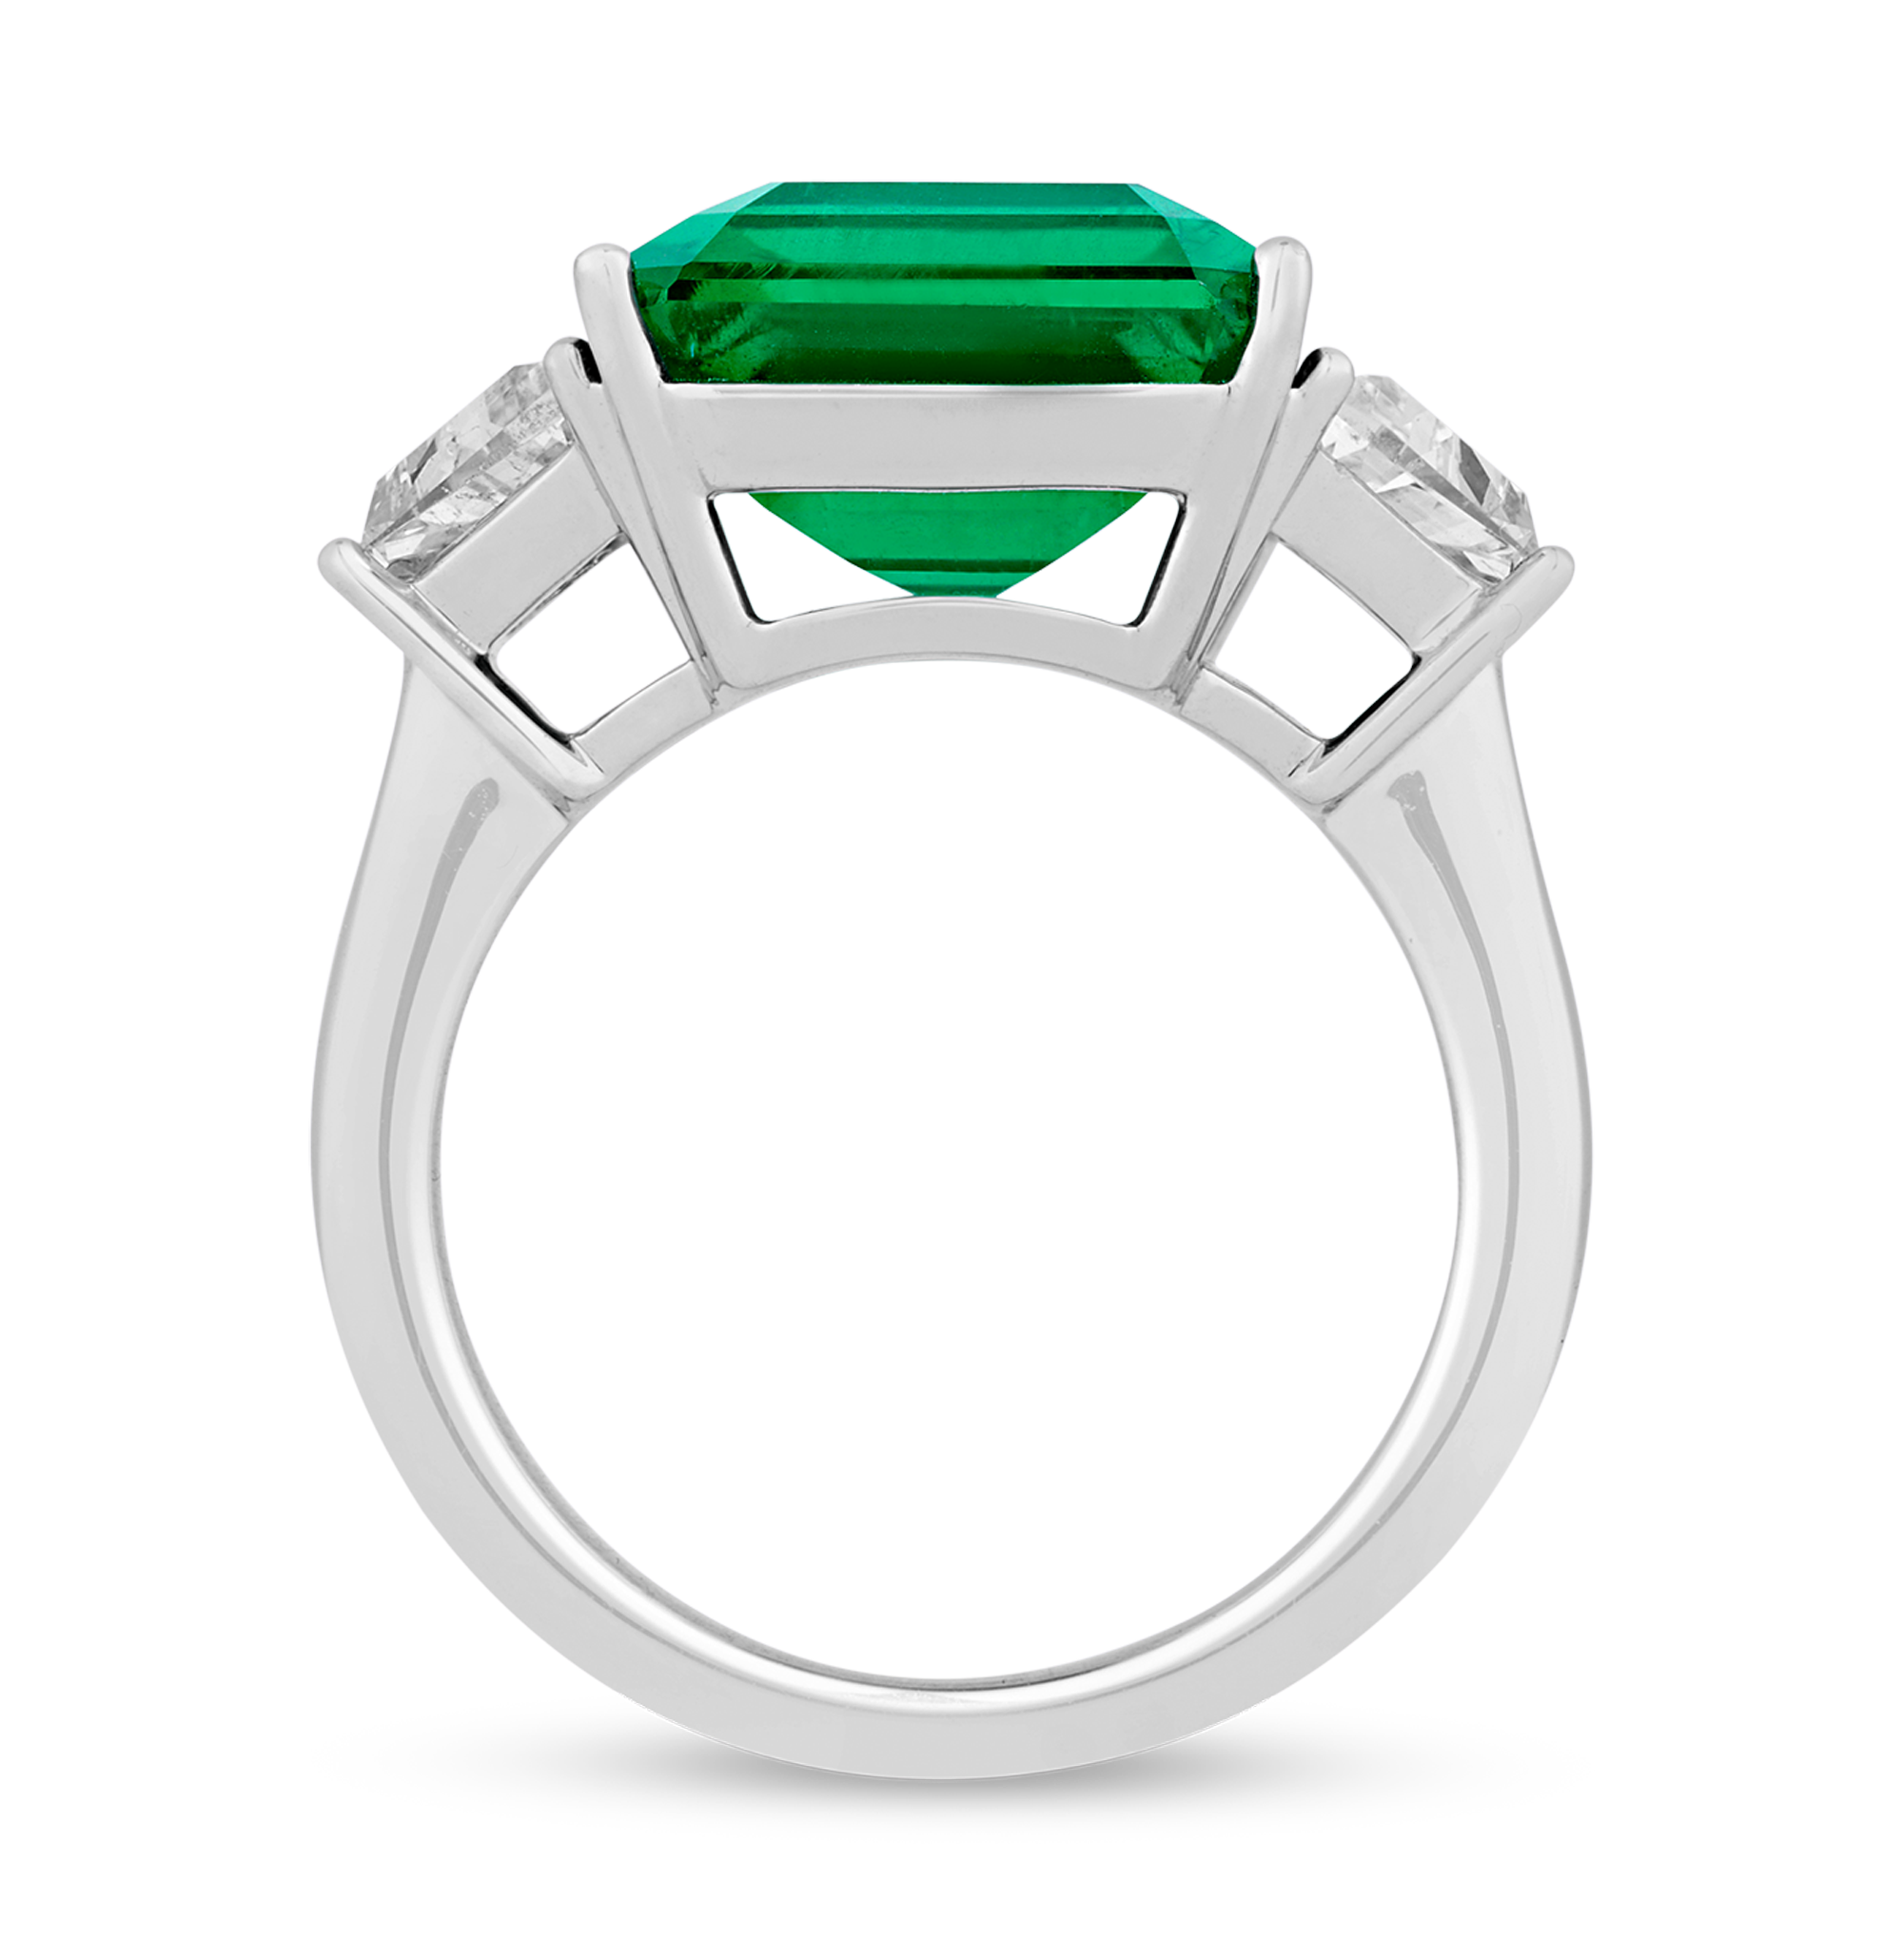 Zambian Emerald Ring, 7.39 Carats